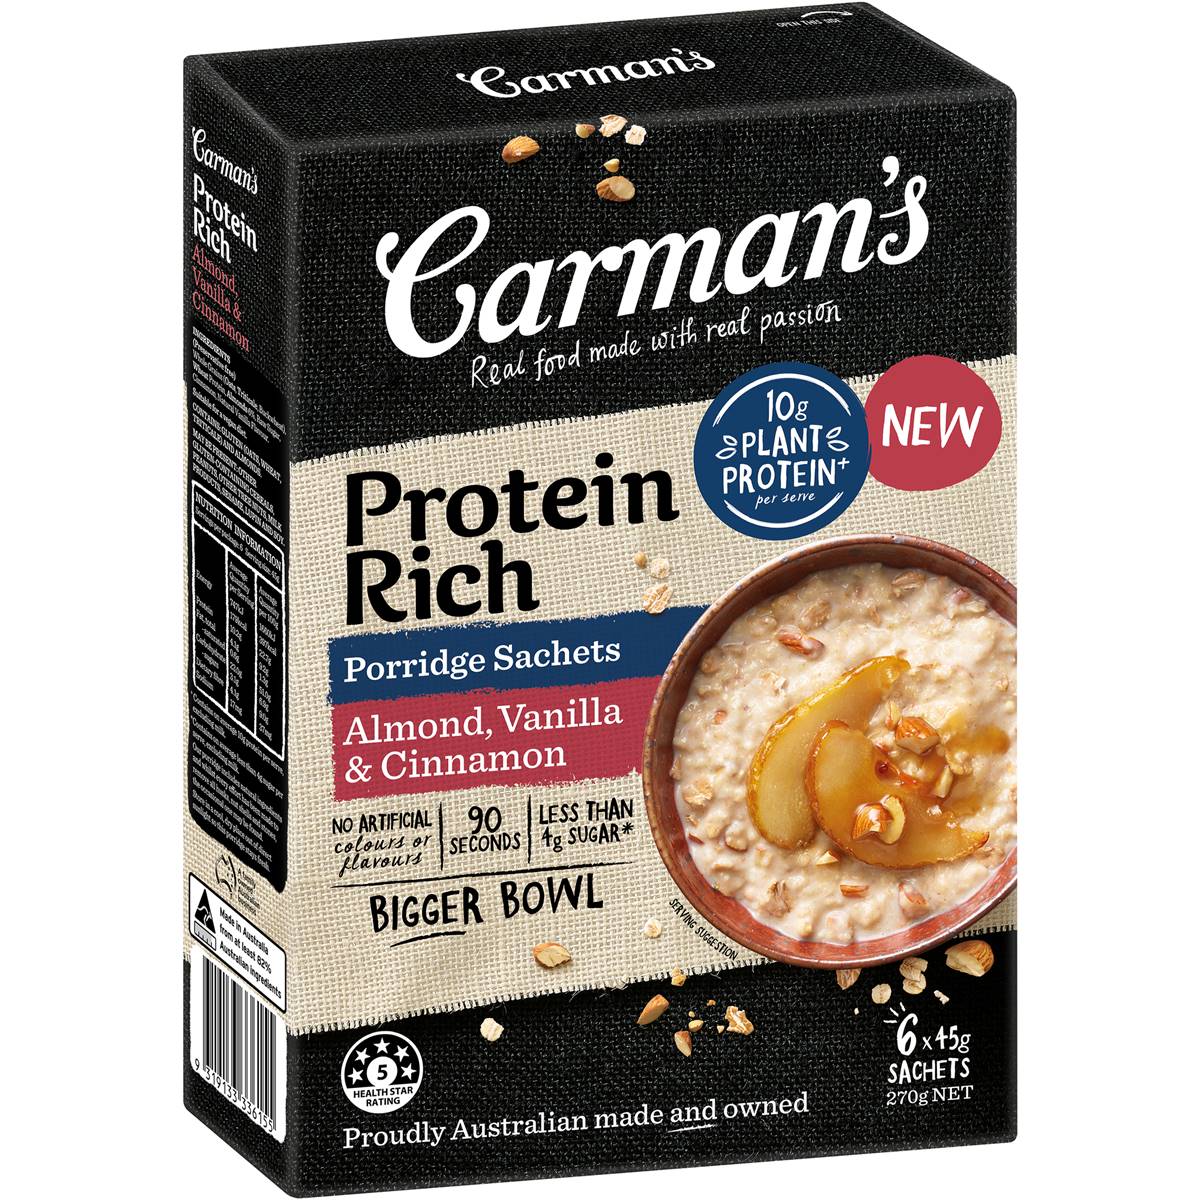 Carman's Protein Rich Porridge Sachets Almond Vanilla & Cinnamon 6x45g